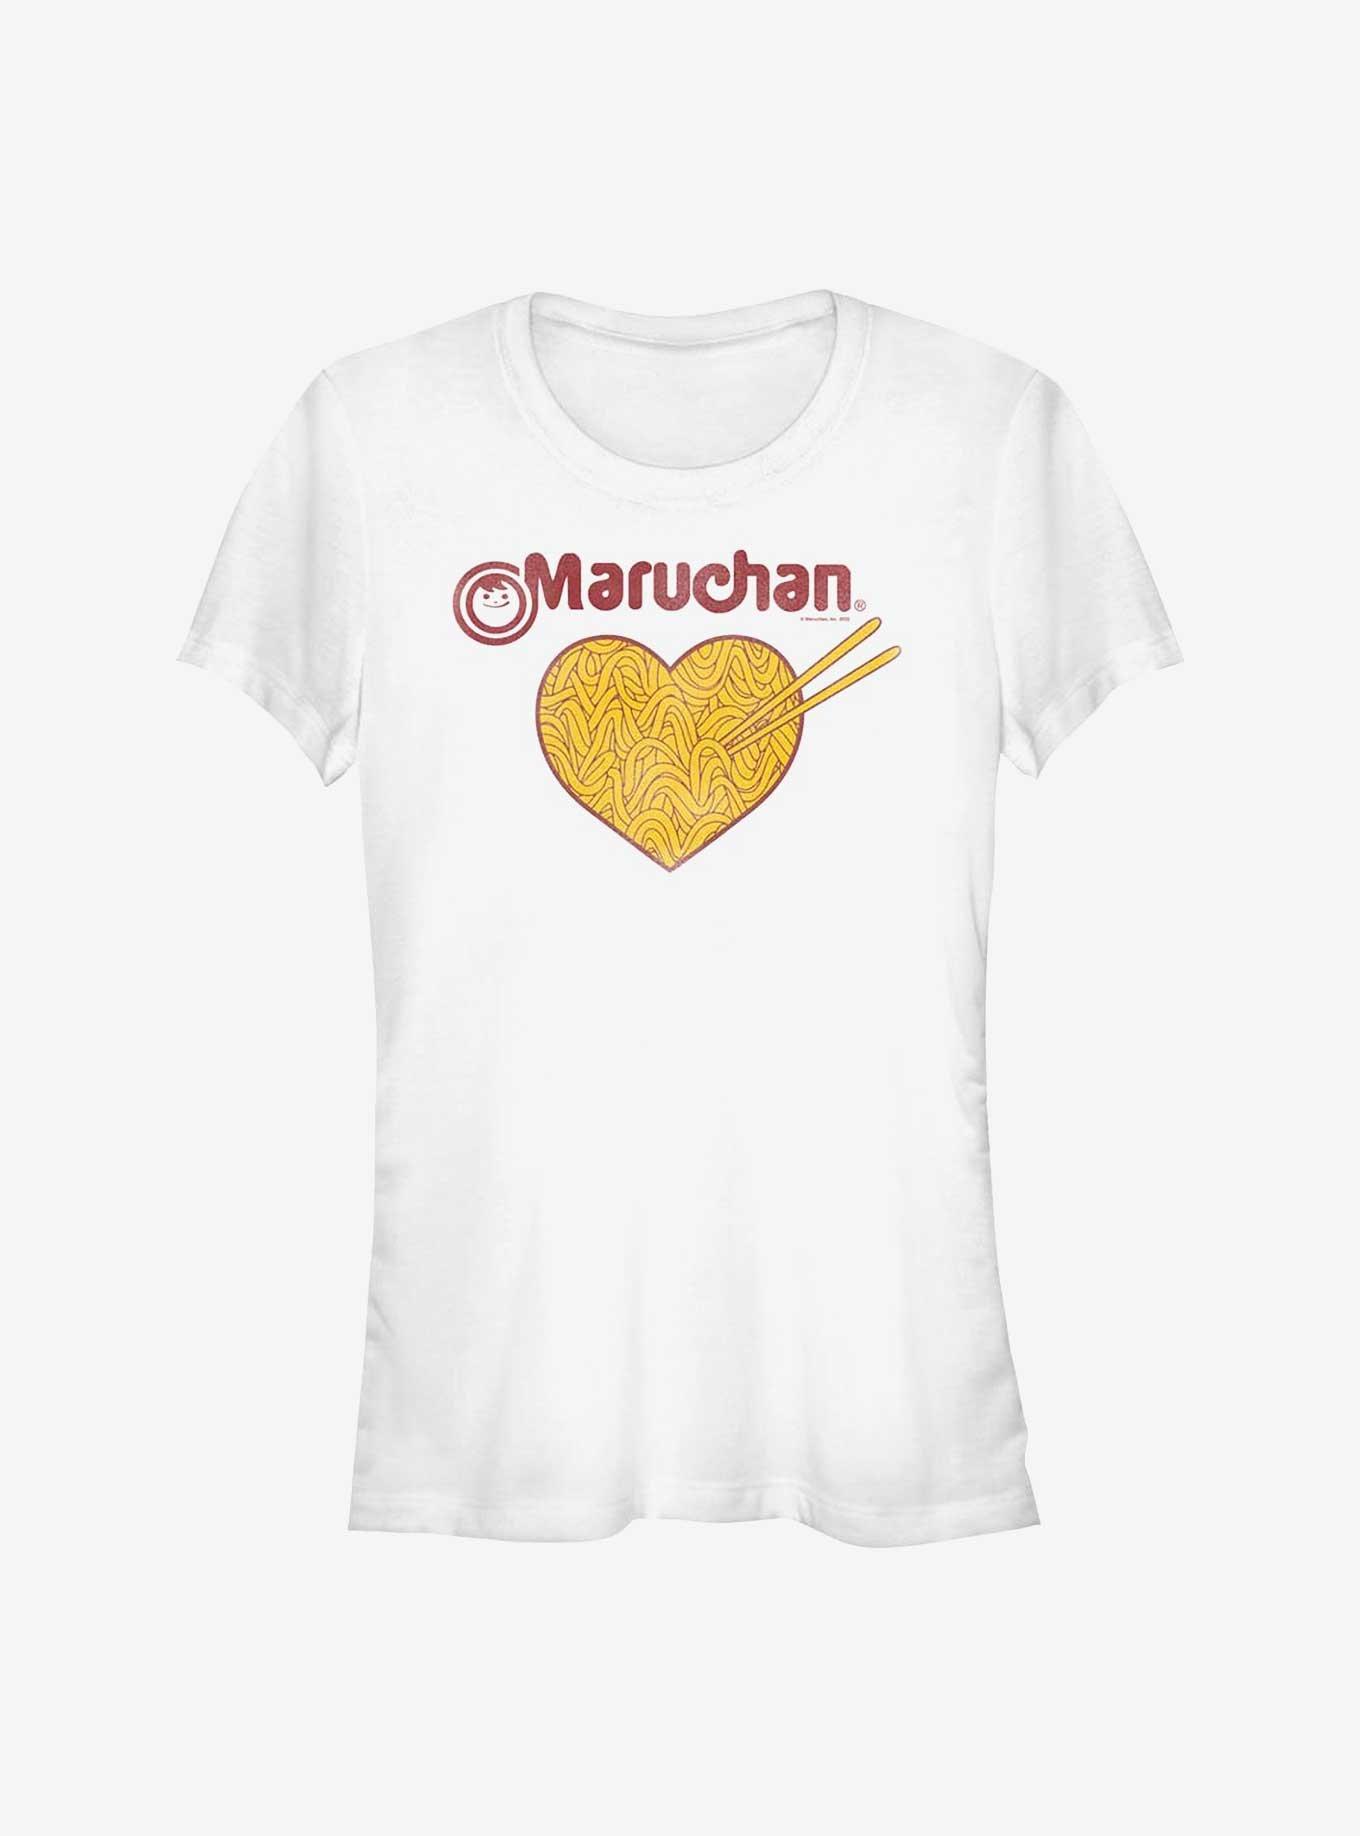 Maruchan Noodles Heart Girls T-Shirt, WHITE, hi-res